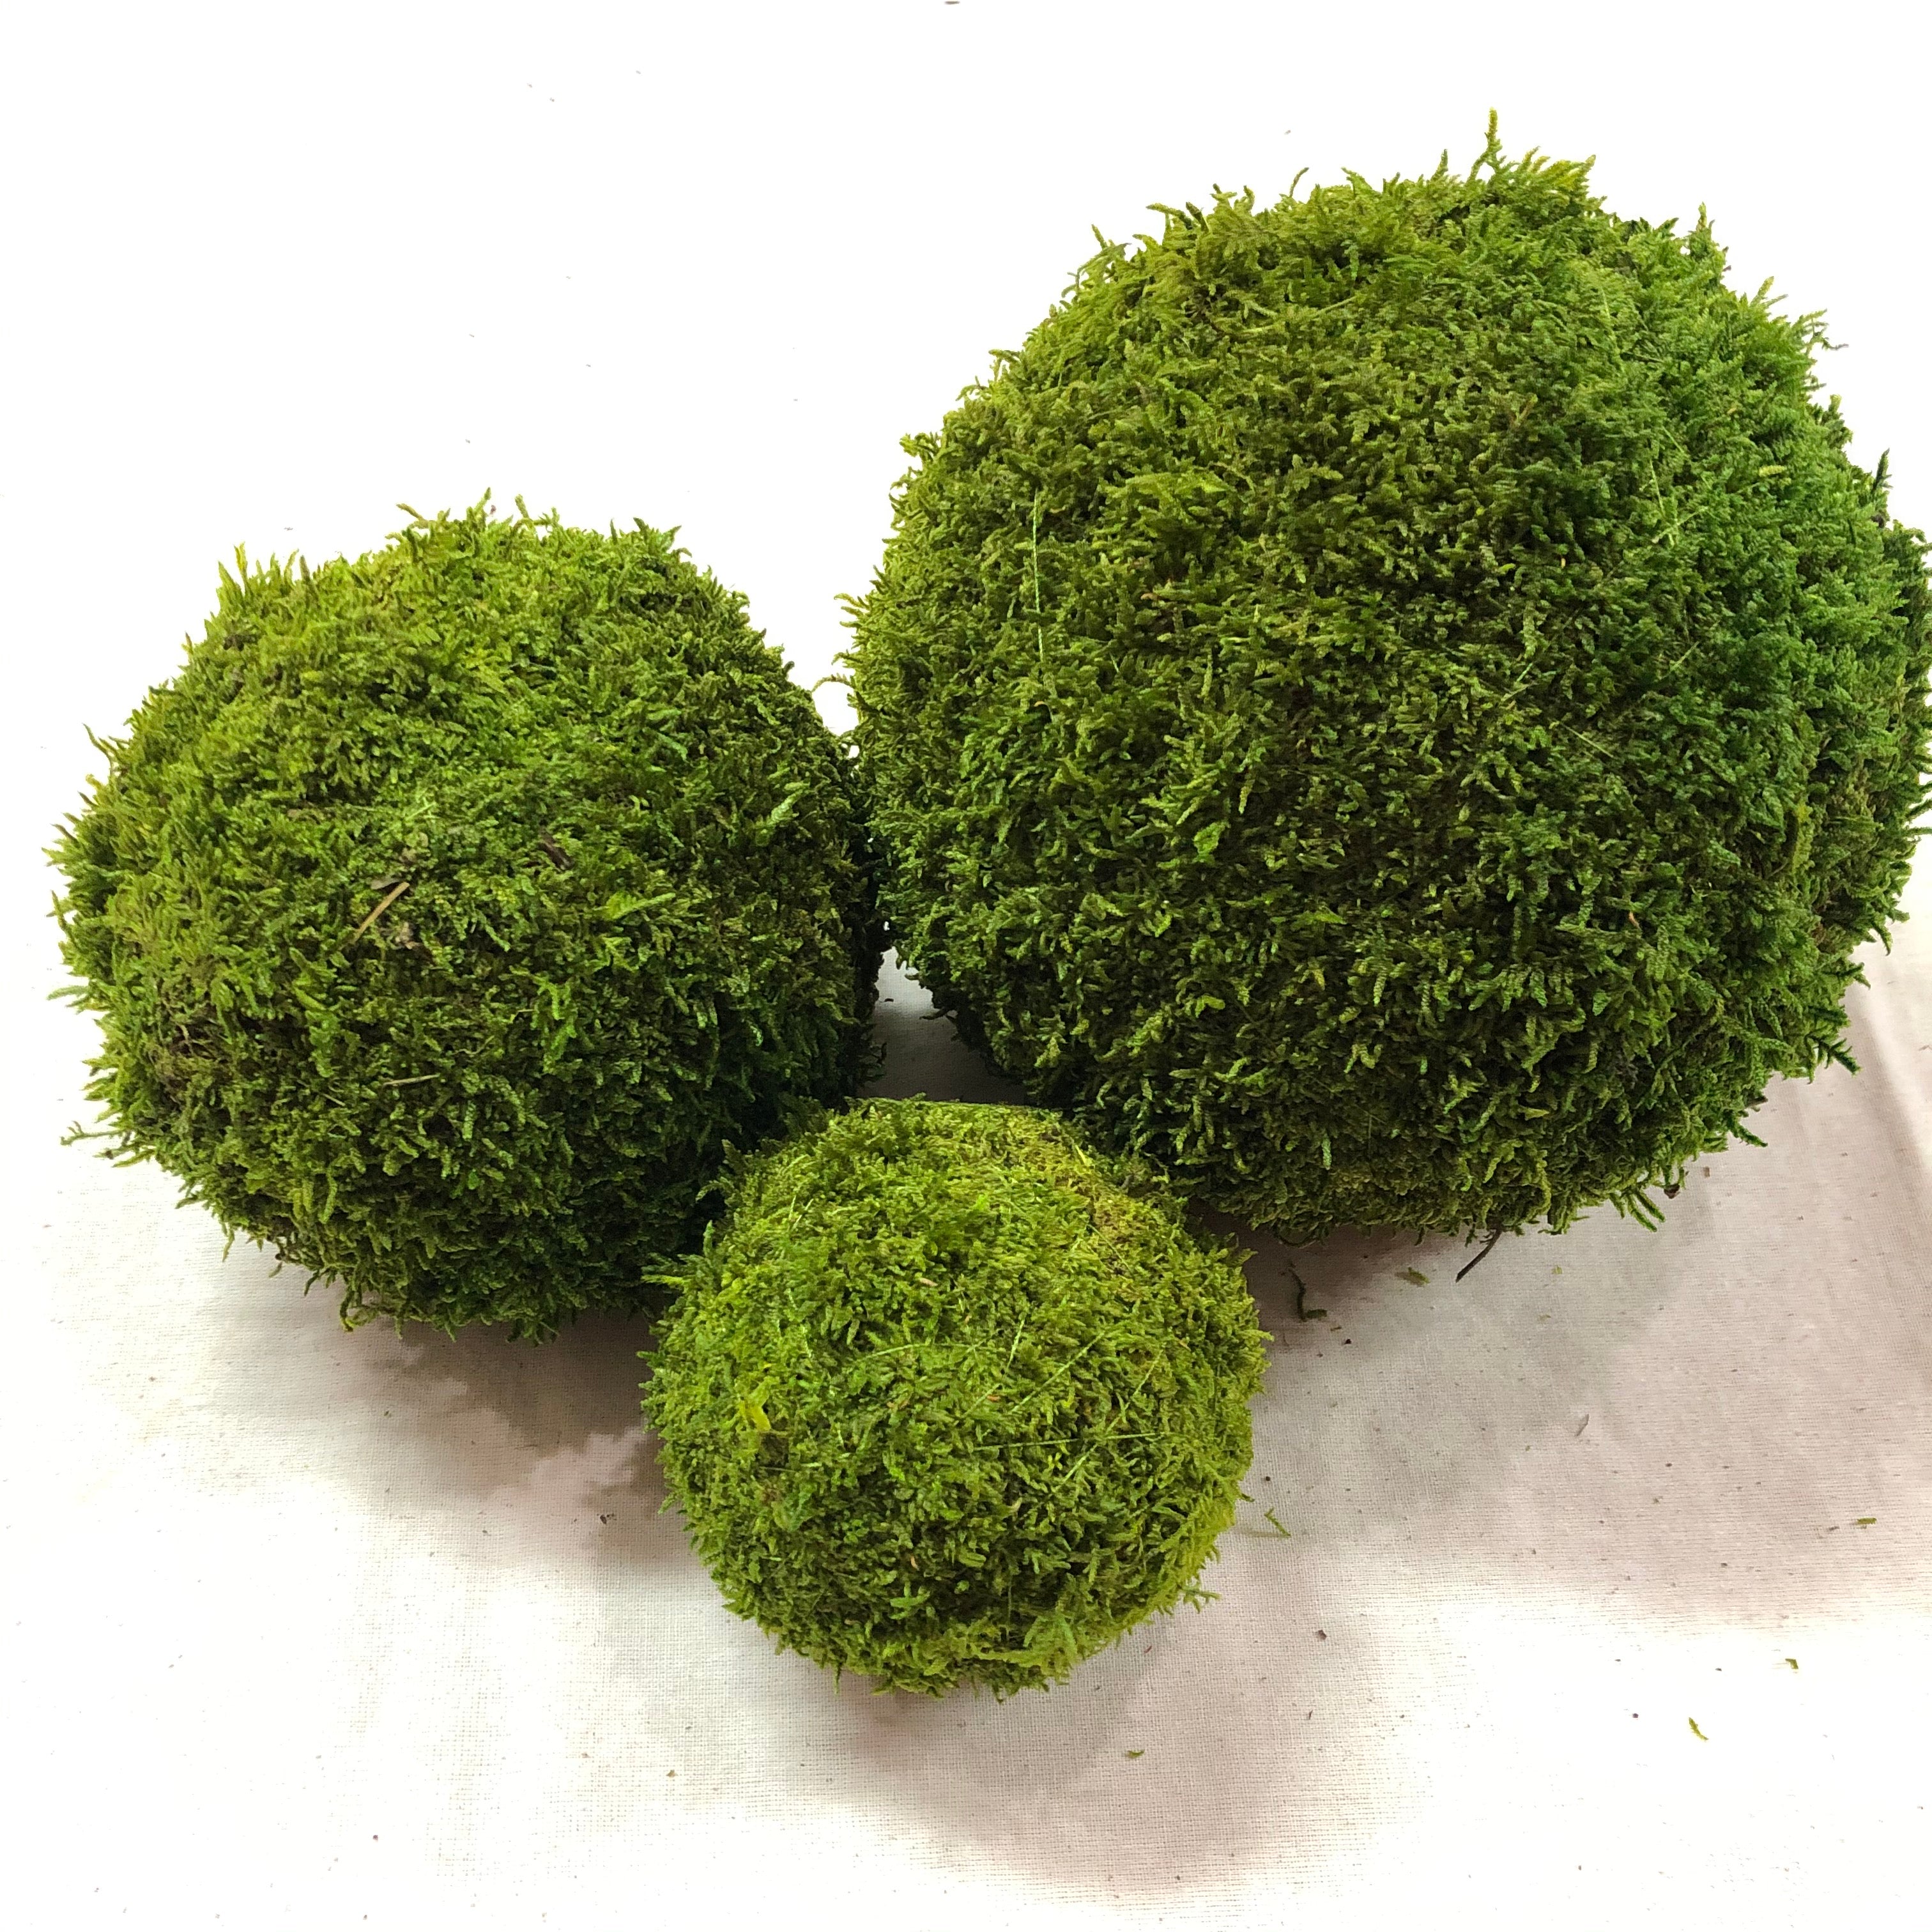 4 Preserved Moss Ball – AddisonsWonderland